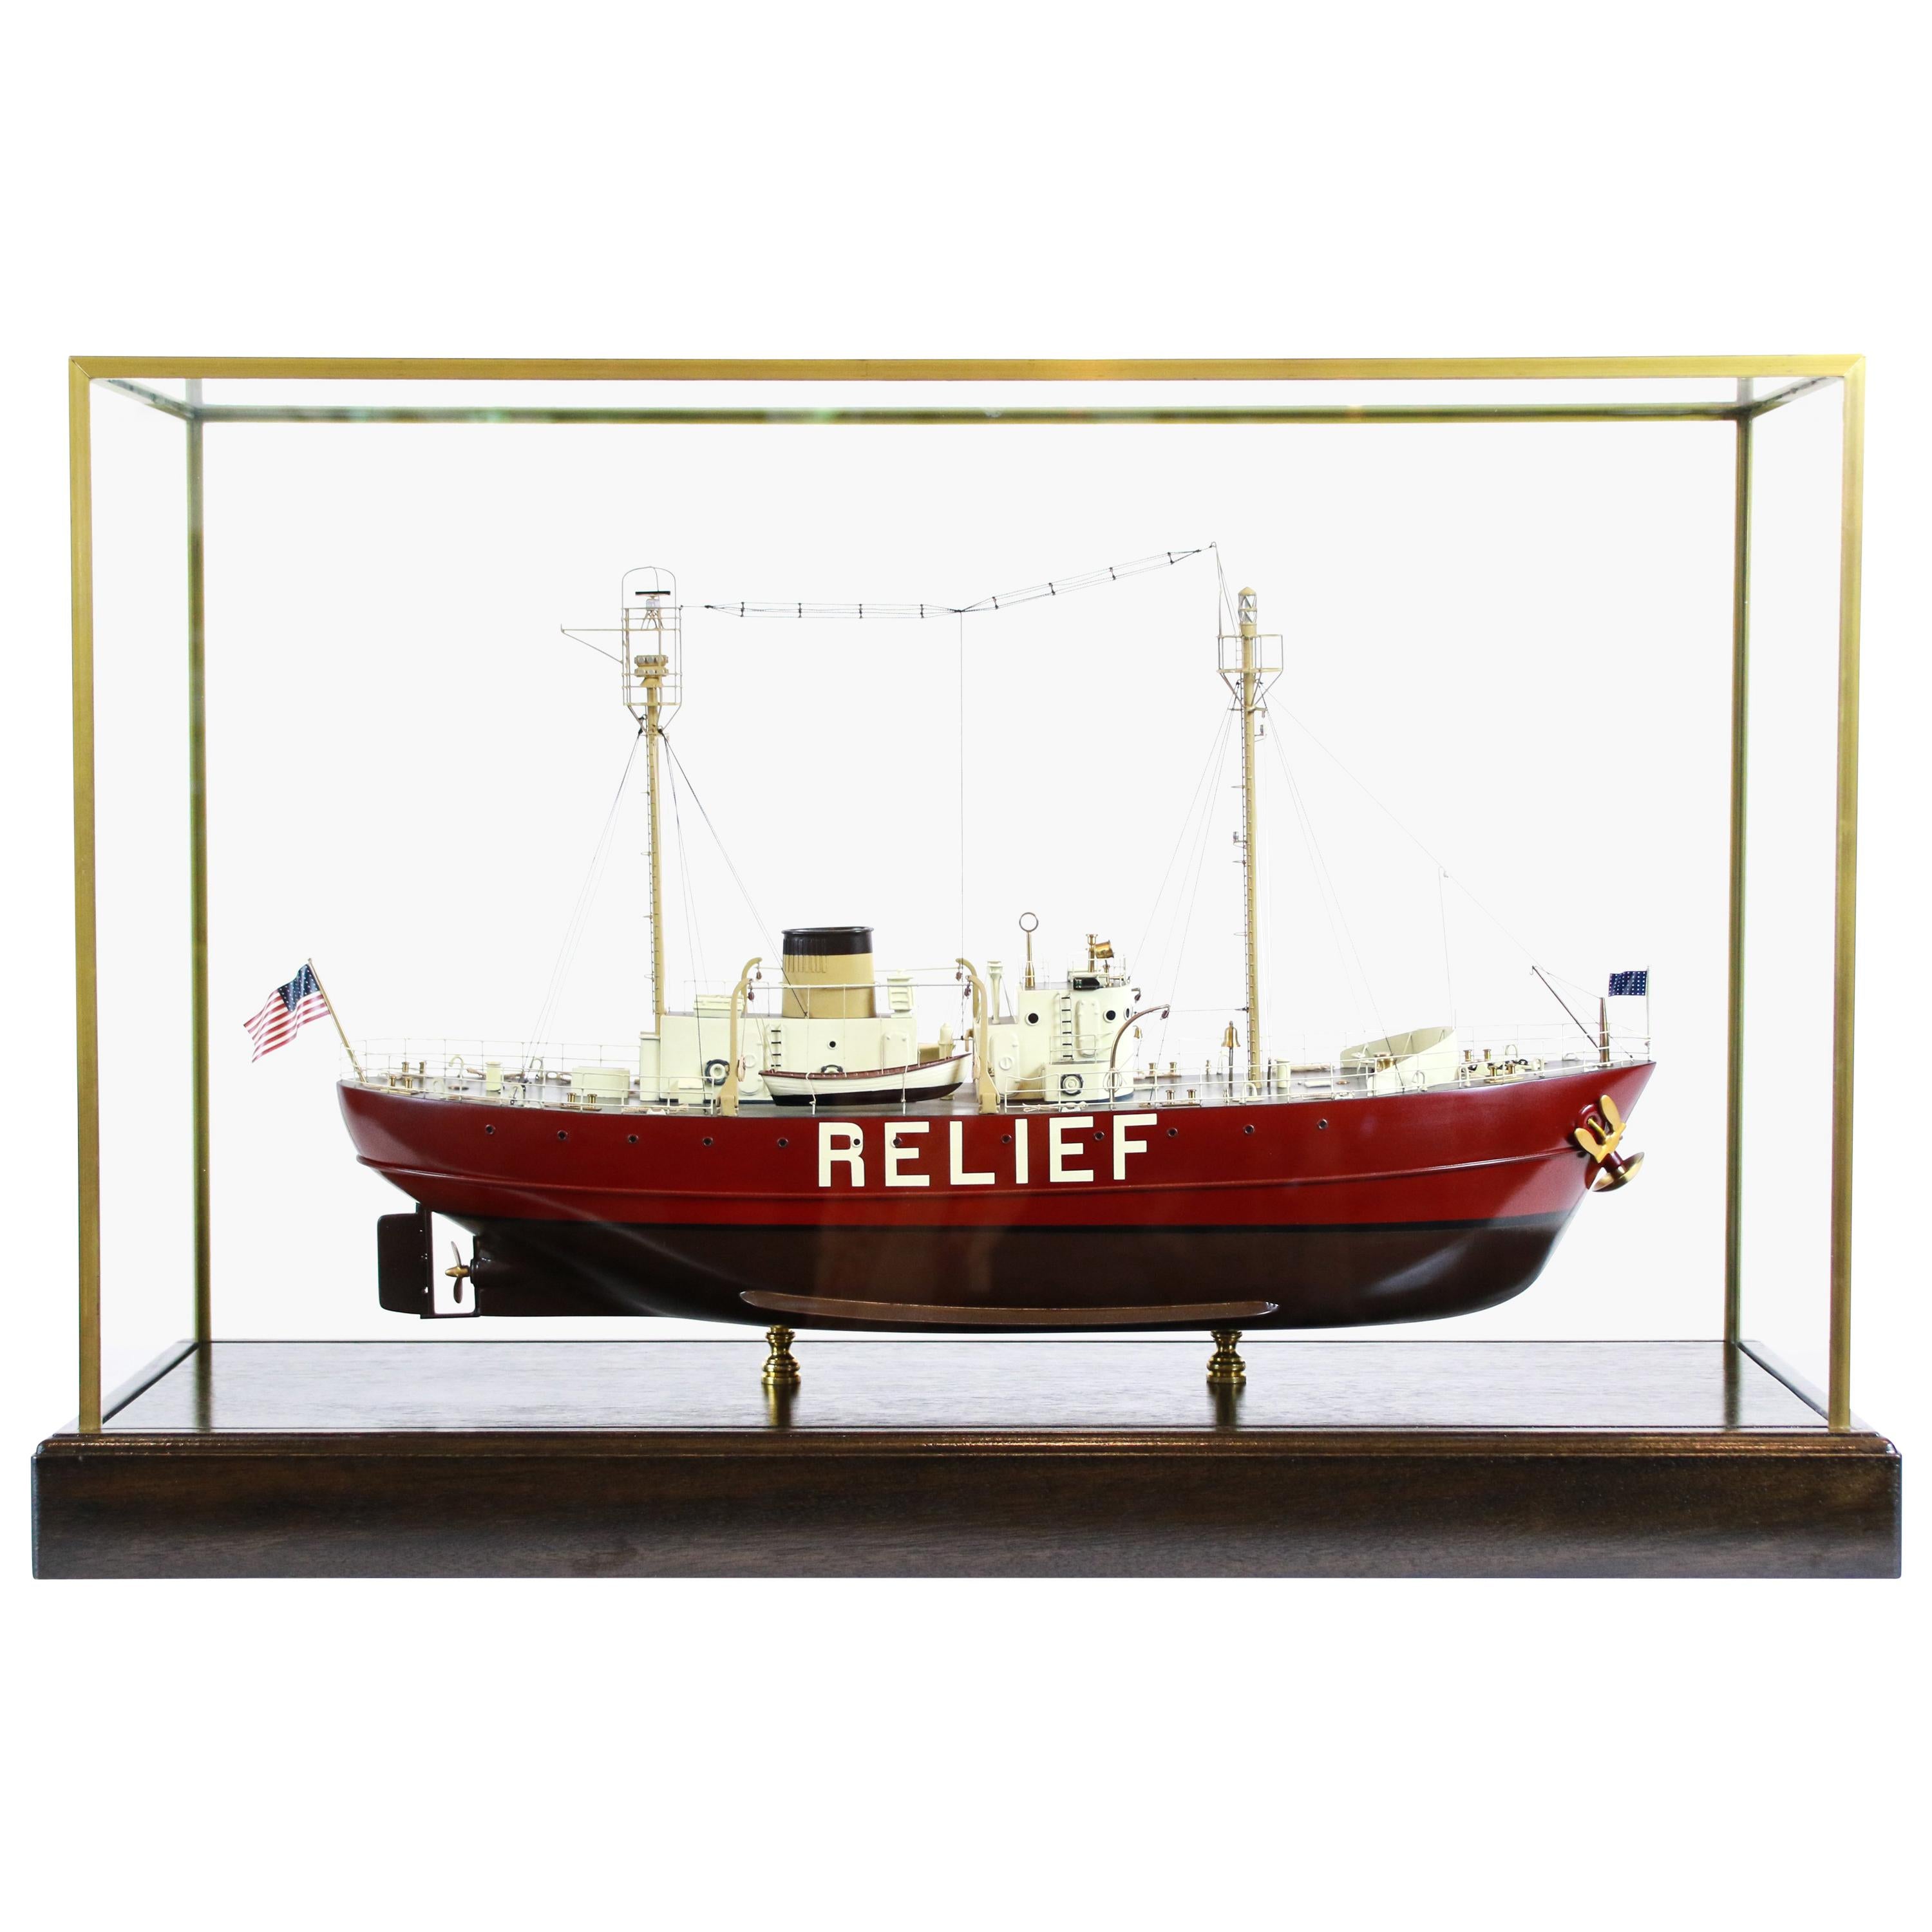 Lightship "Relief" of Oakland, California